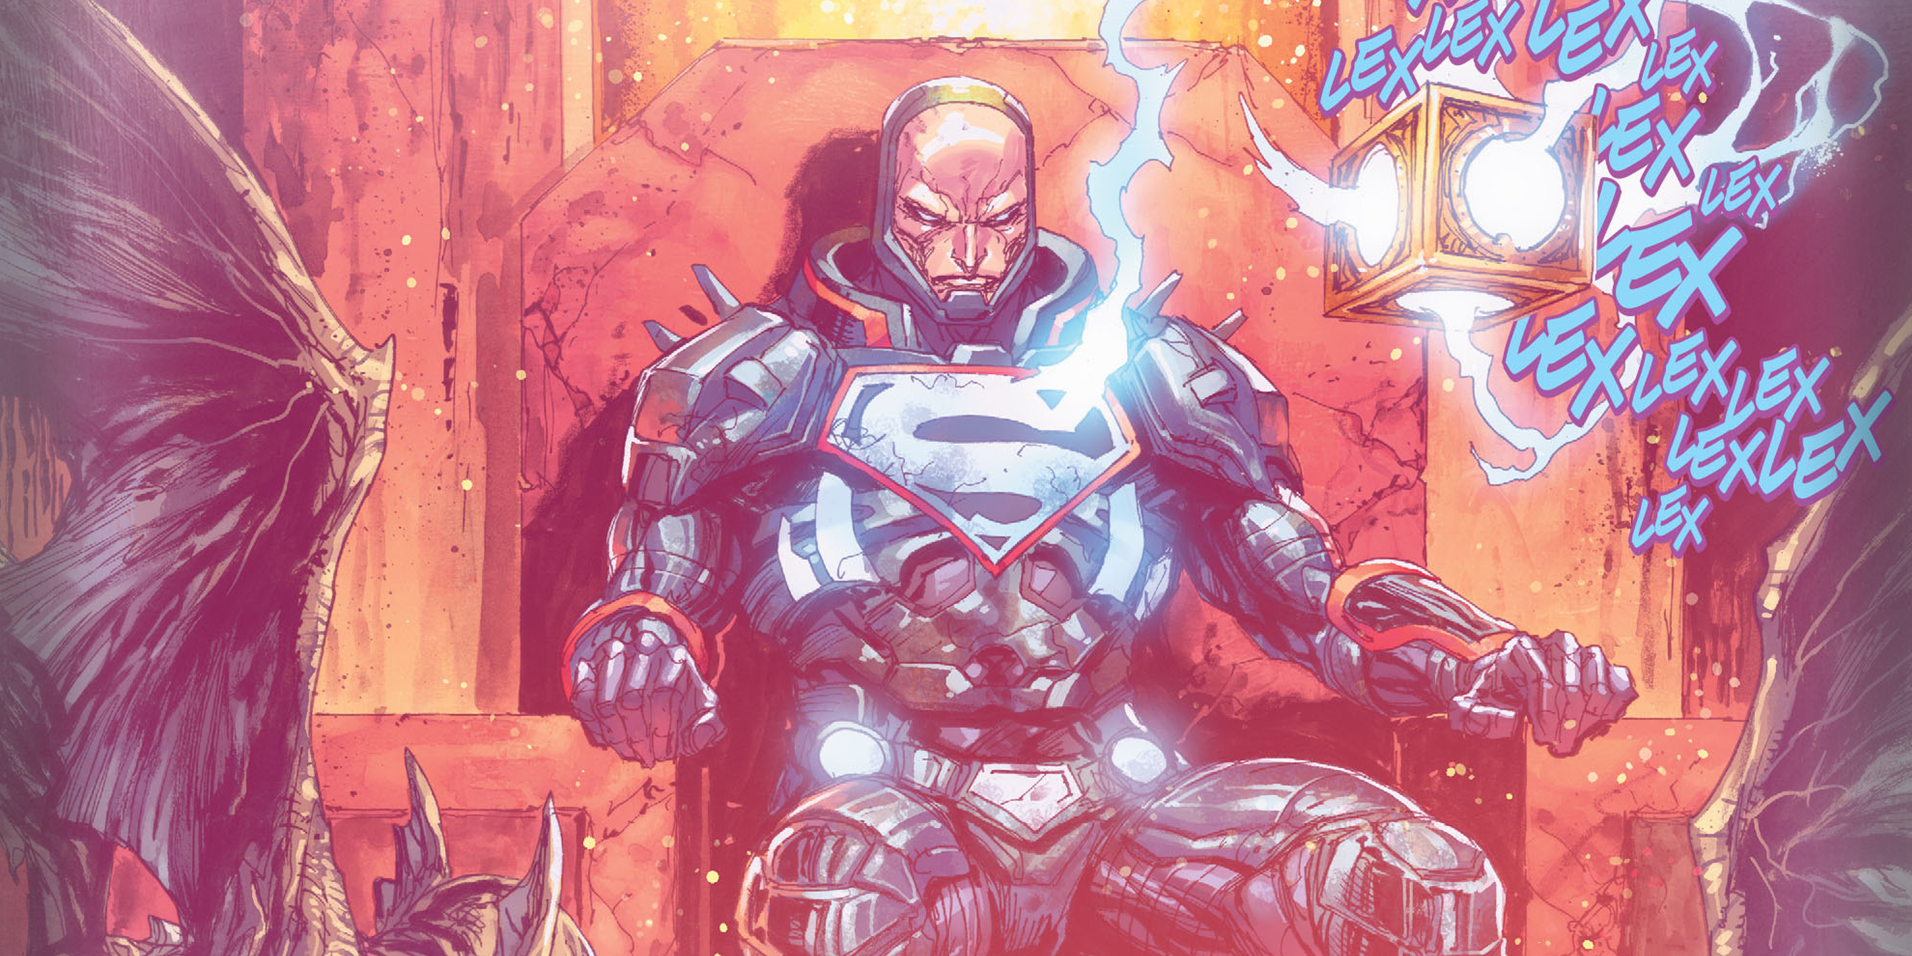 Lex Luthor as Darkseid